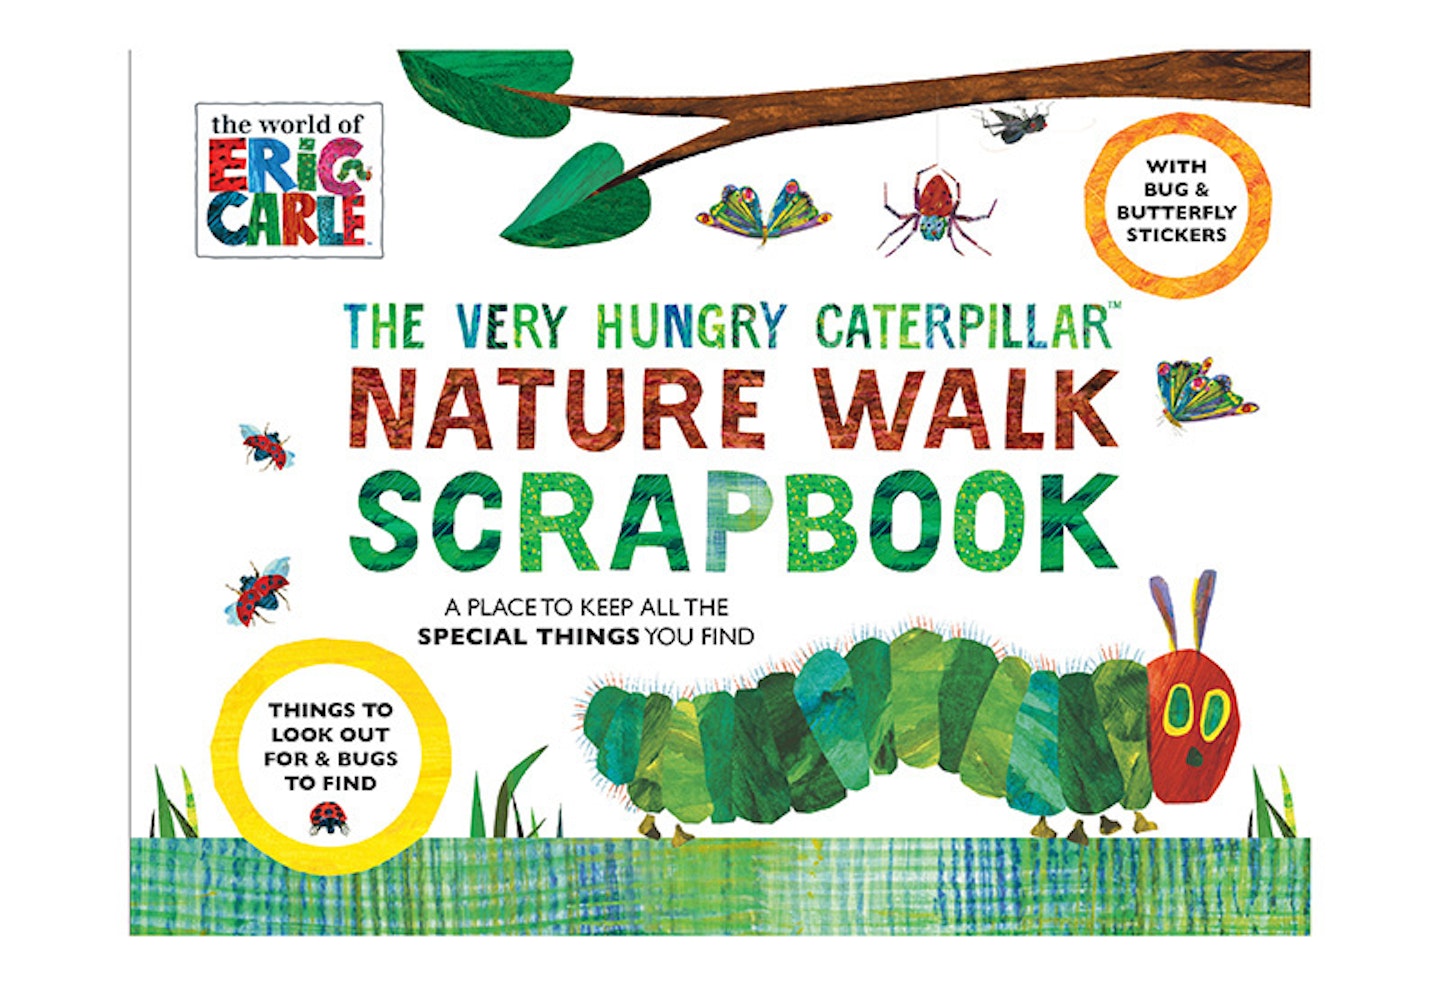 Very Hungry Caterpillar Nature Walk Scrapbook, £7.99, amazon.co.uk